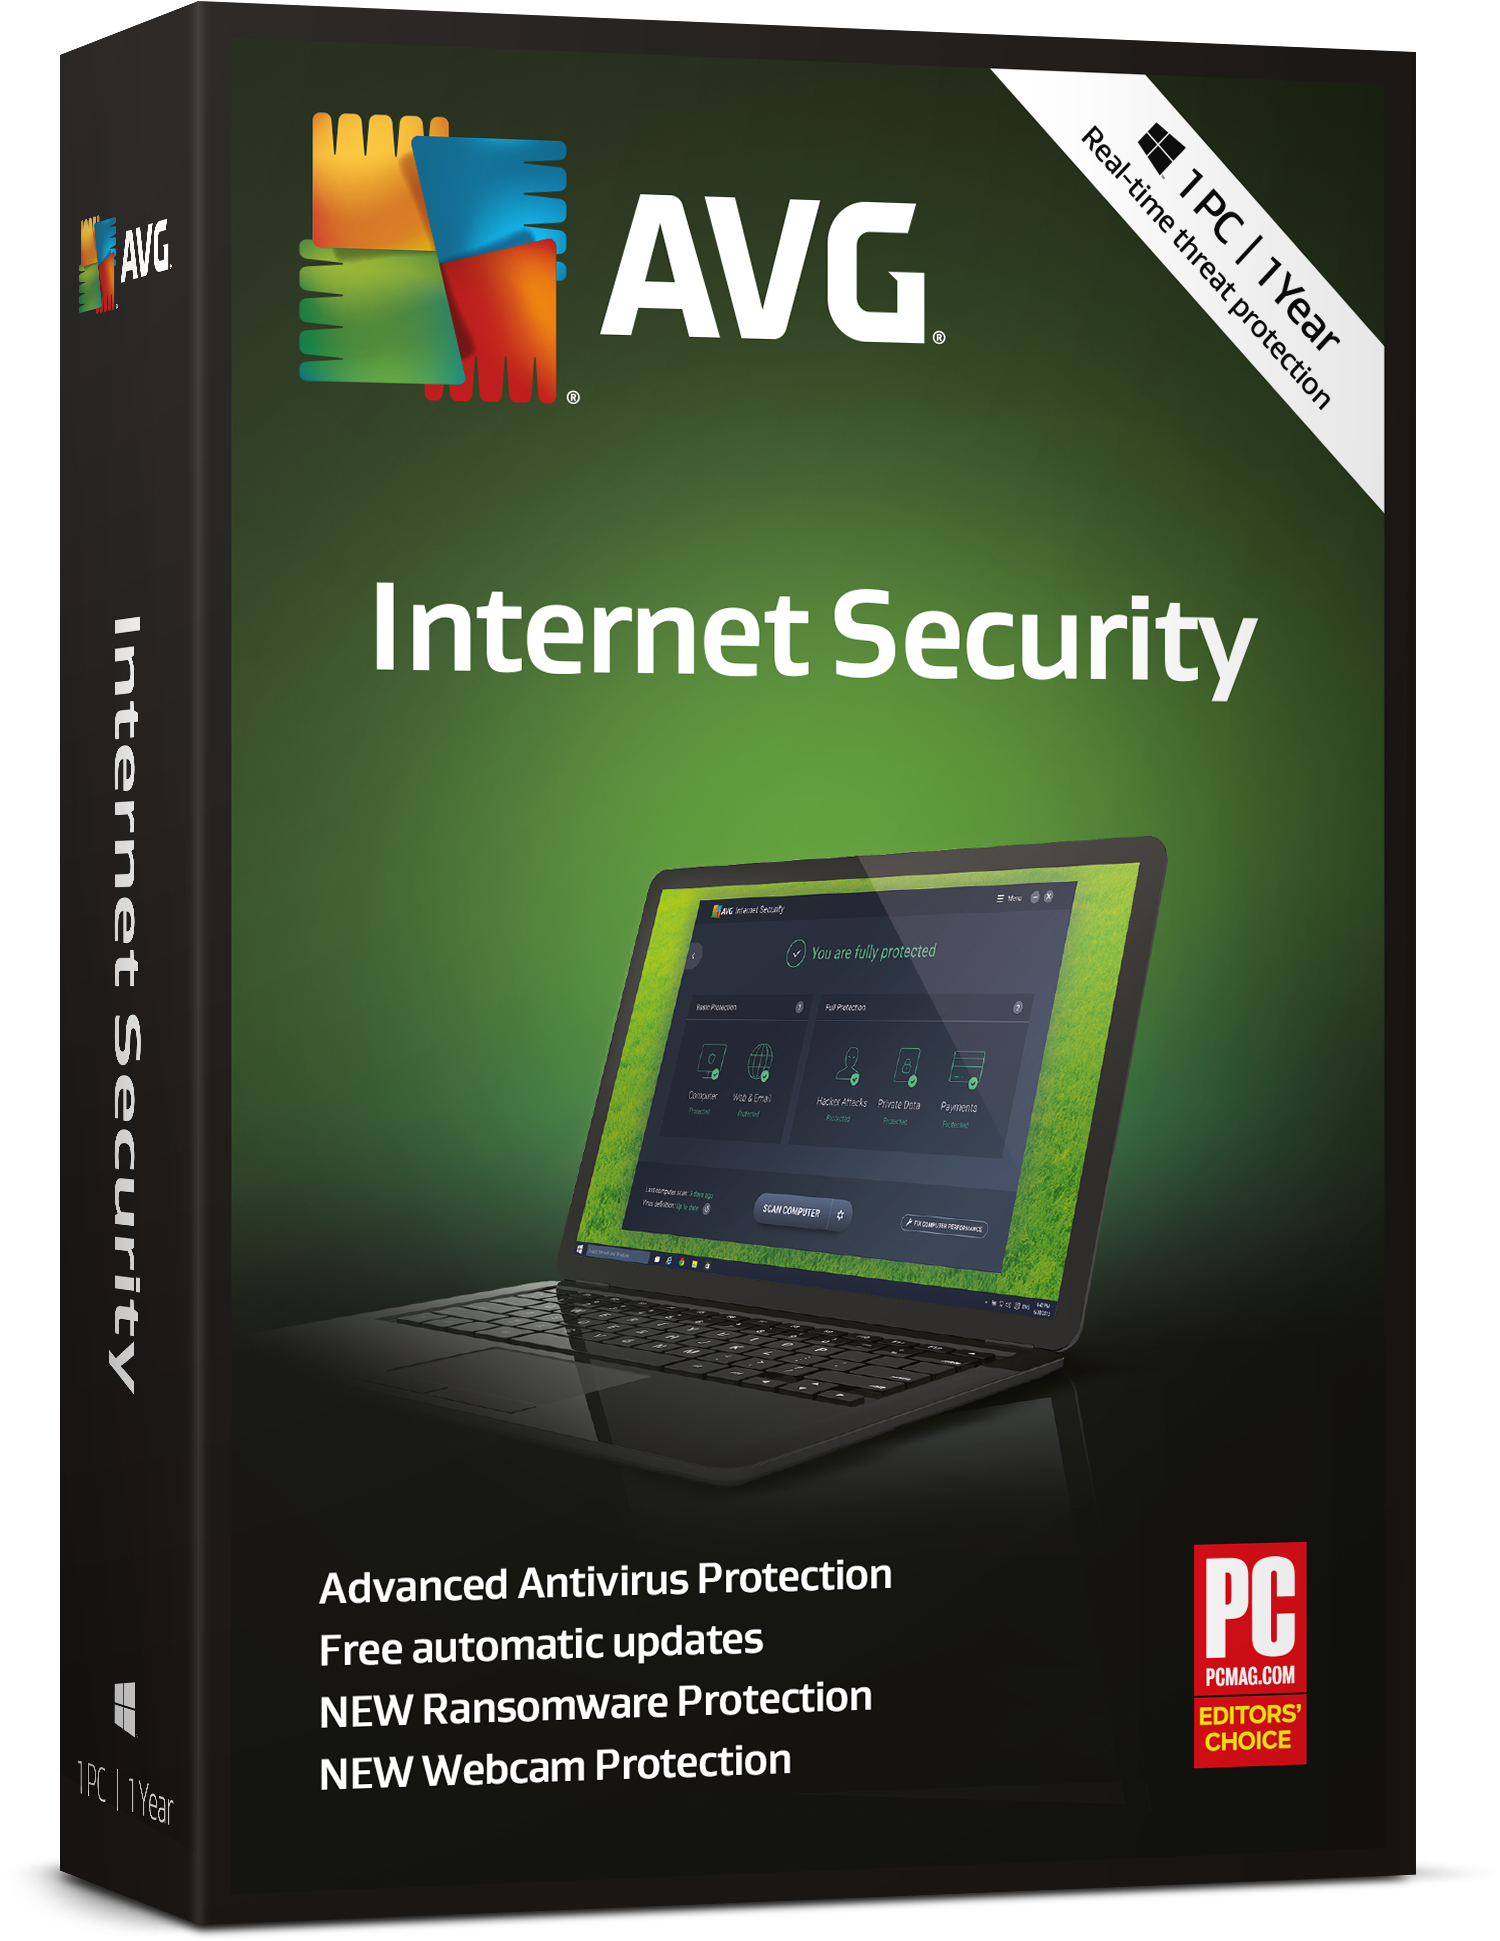 AVG Internet Security 1 Year License